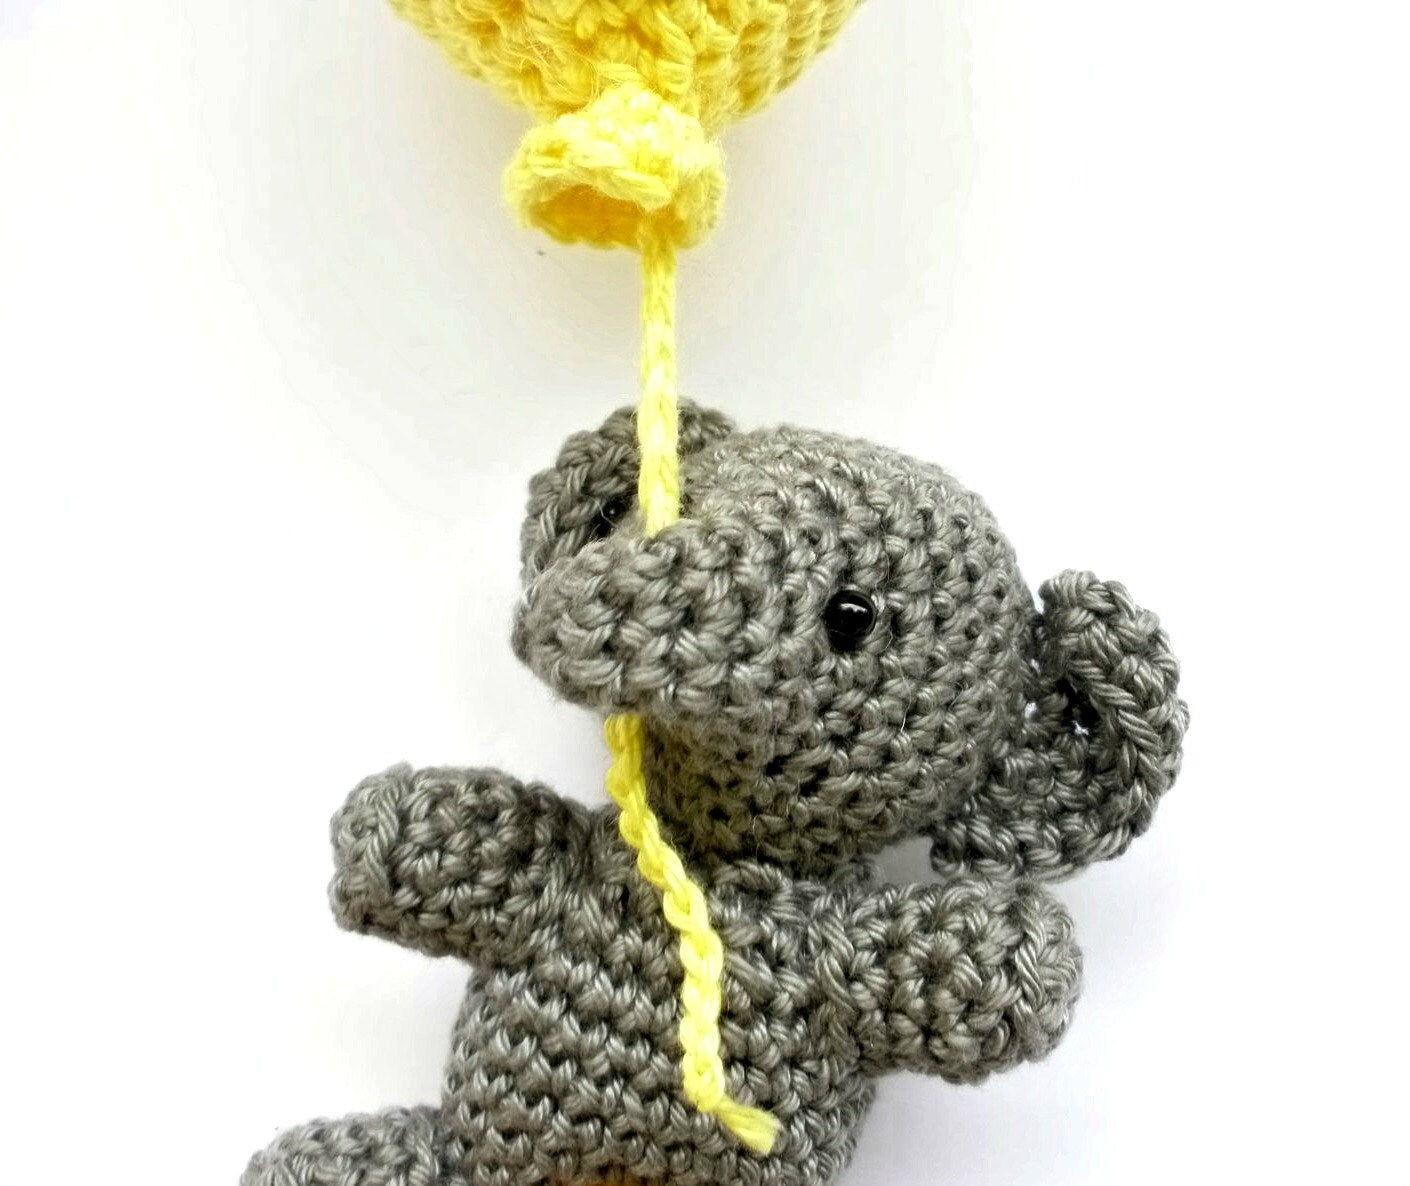 Crochet Elephant with balloon